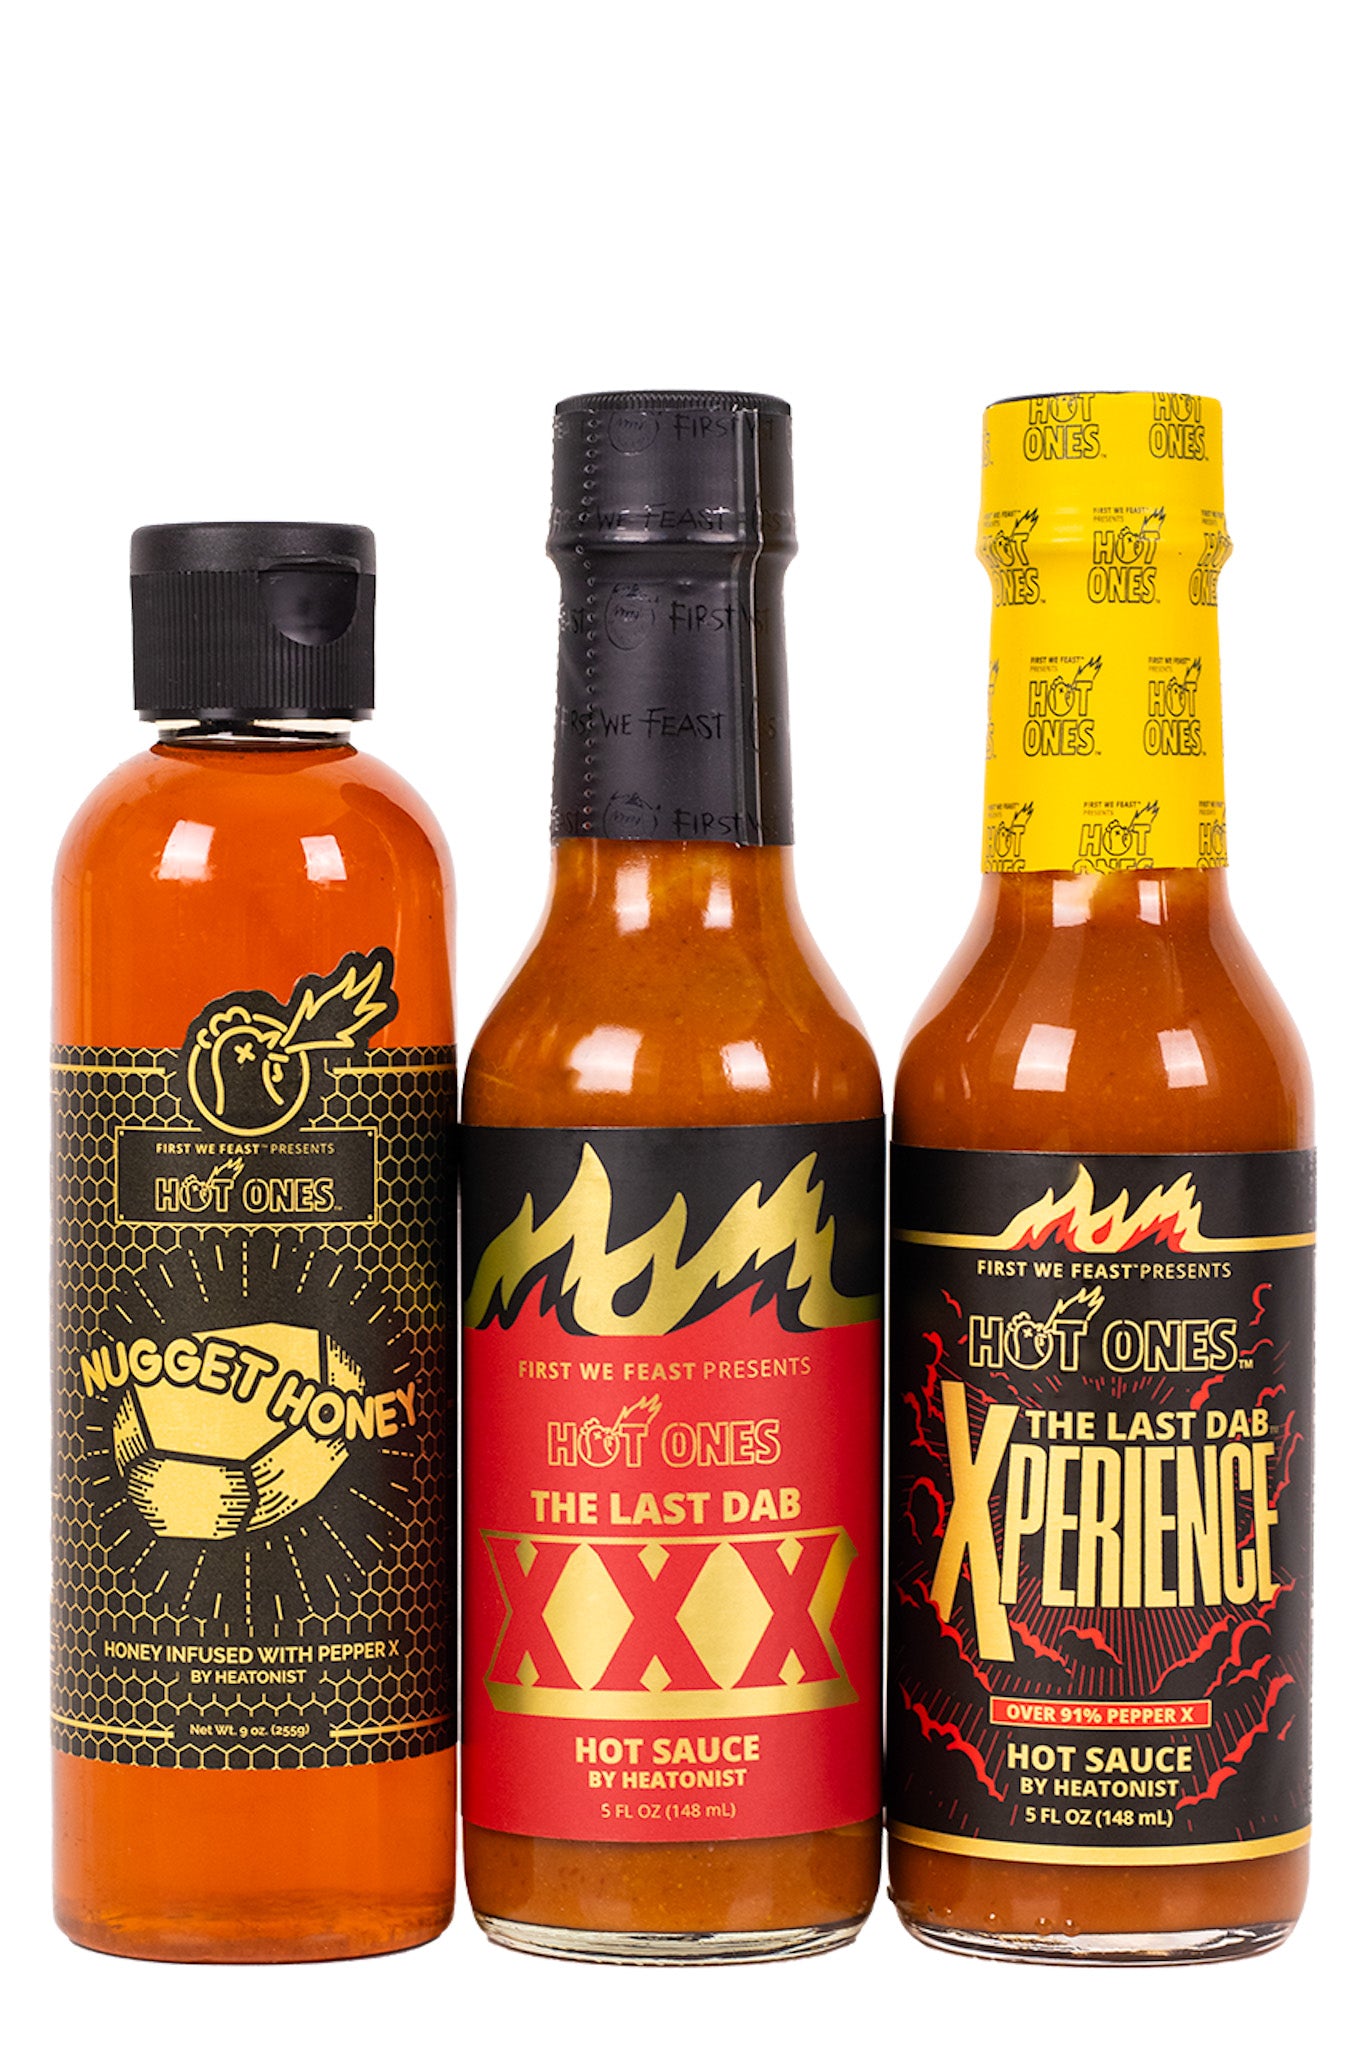 Hot Ones Hot Sauce Pepper X Trio Pack